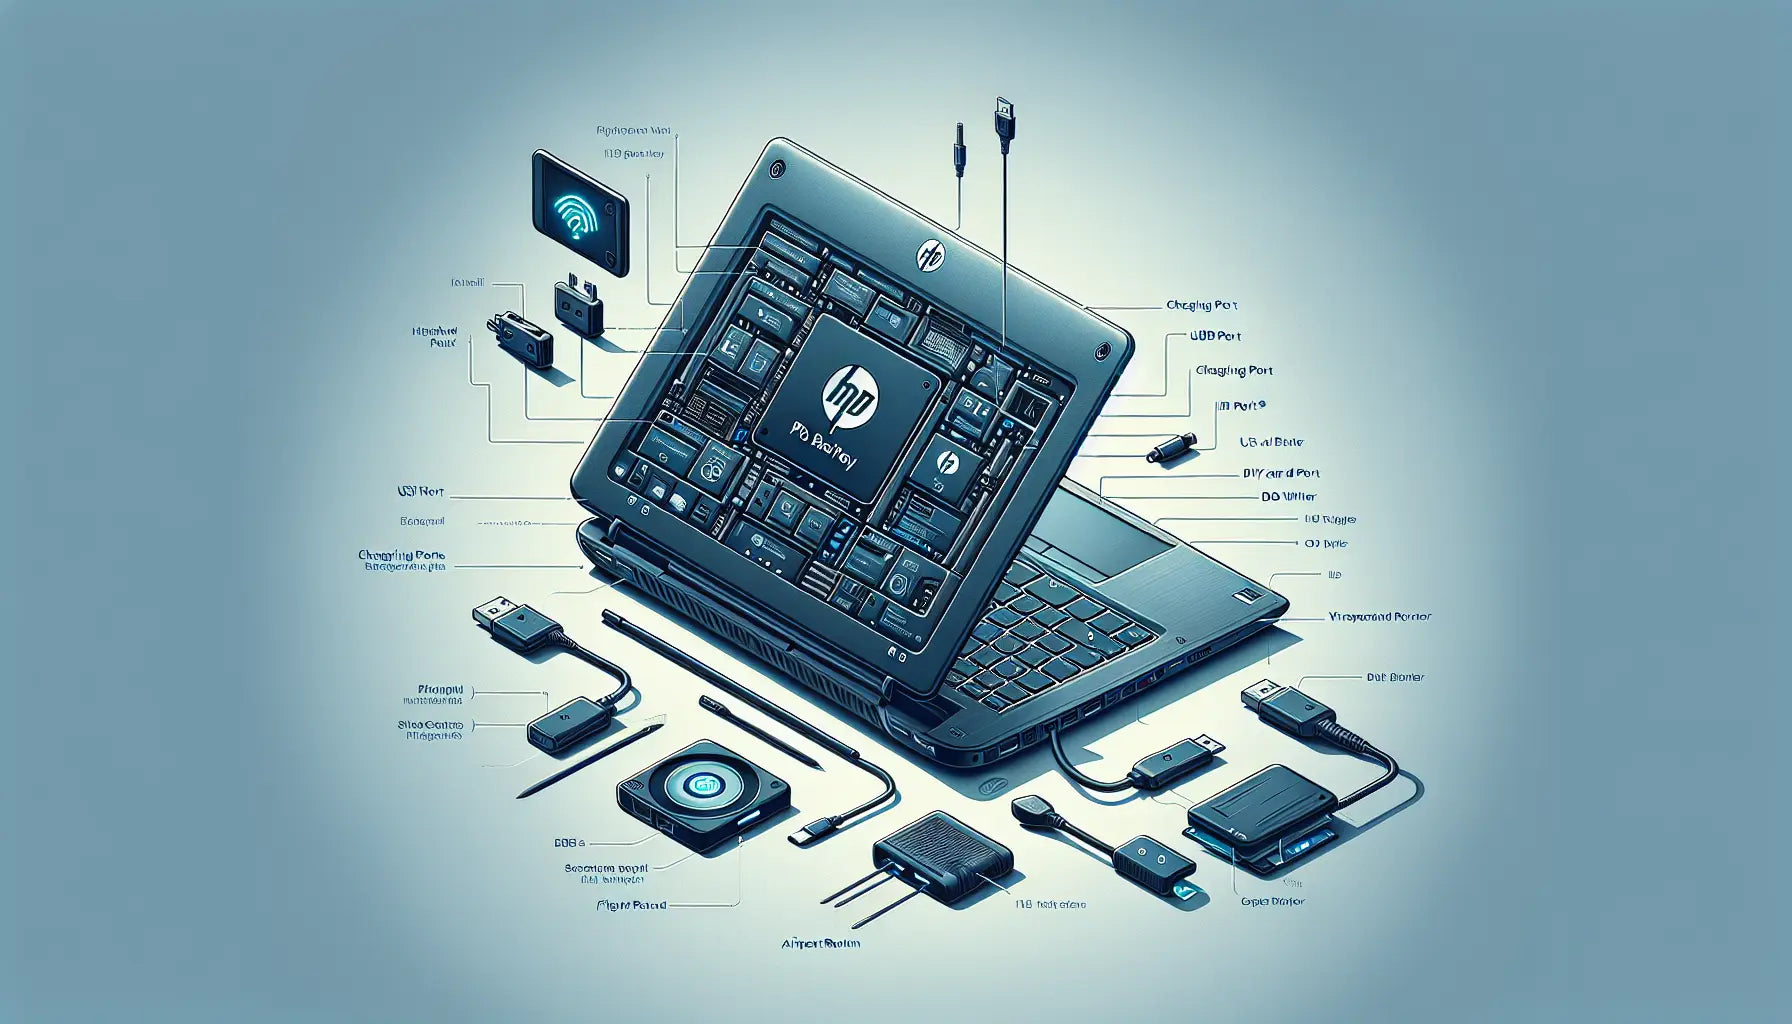 HP ProBook 640 G2 i5 6th Gen Review: A Reliable Business Laptop